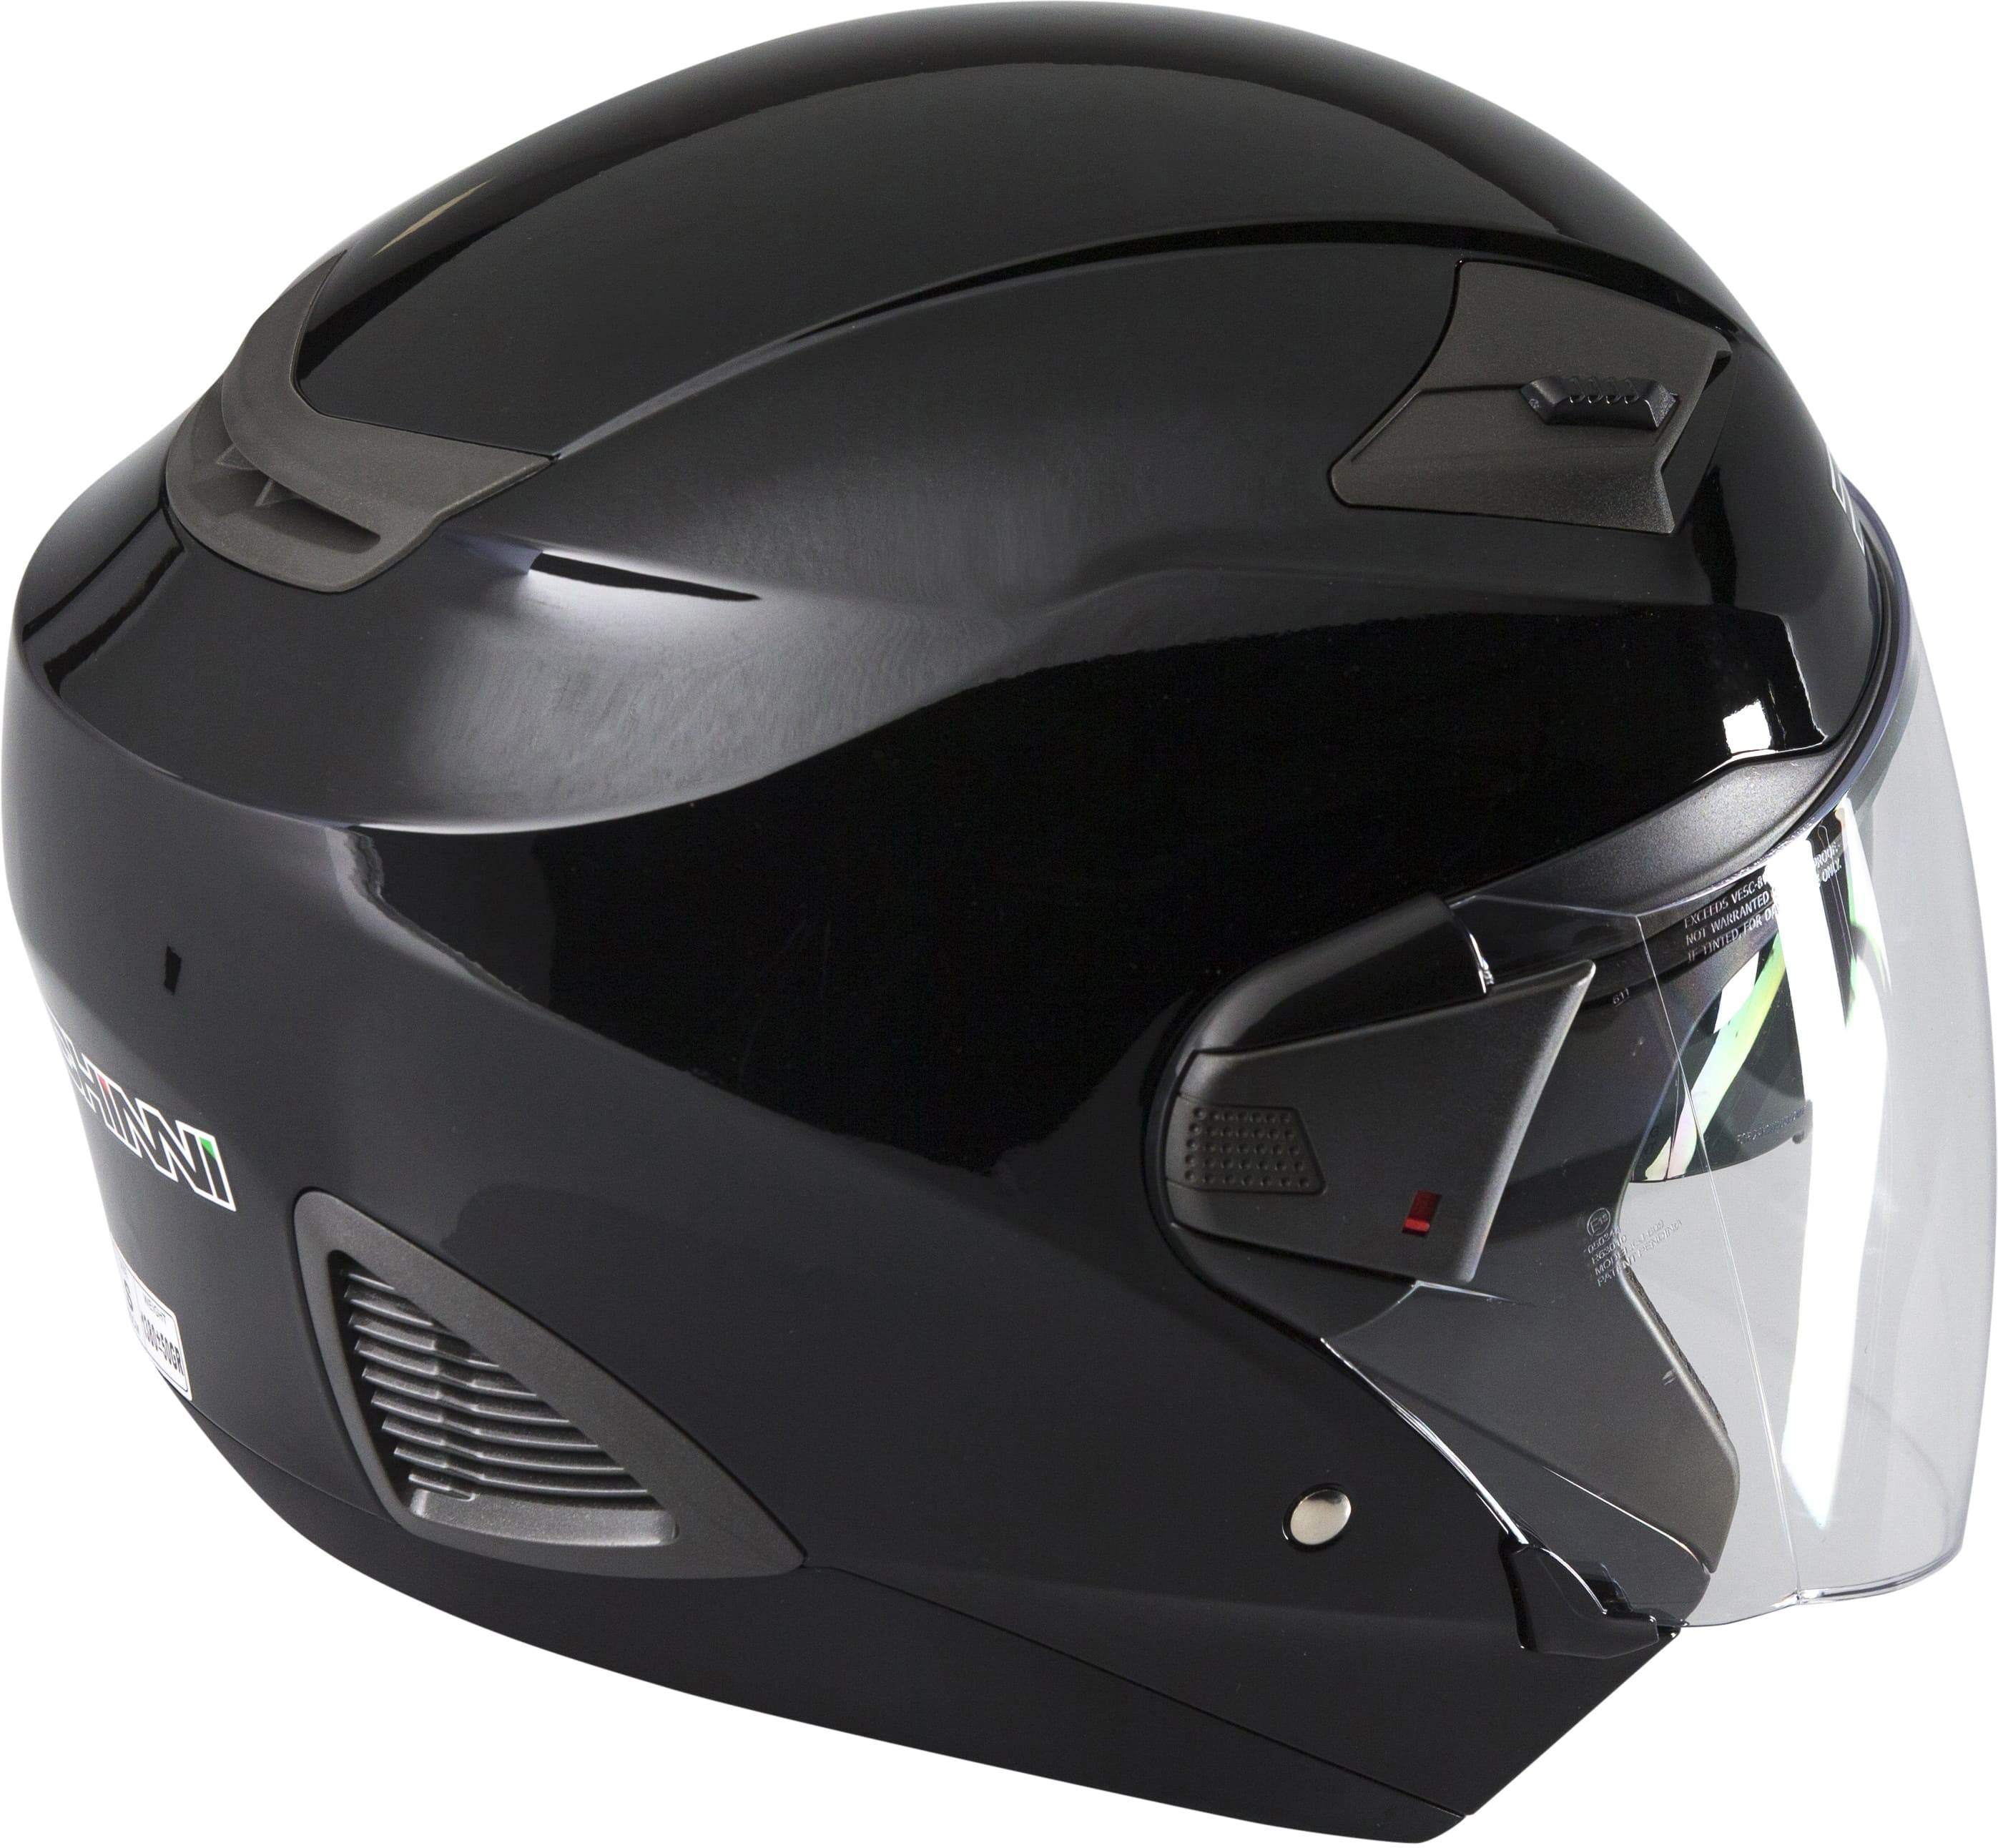 Duchinni D205 Jet Open Face Motorcycle Helmet Black Crash Lid Scooter Motorbike 